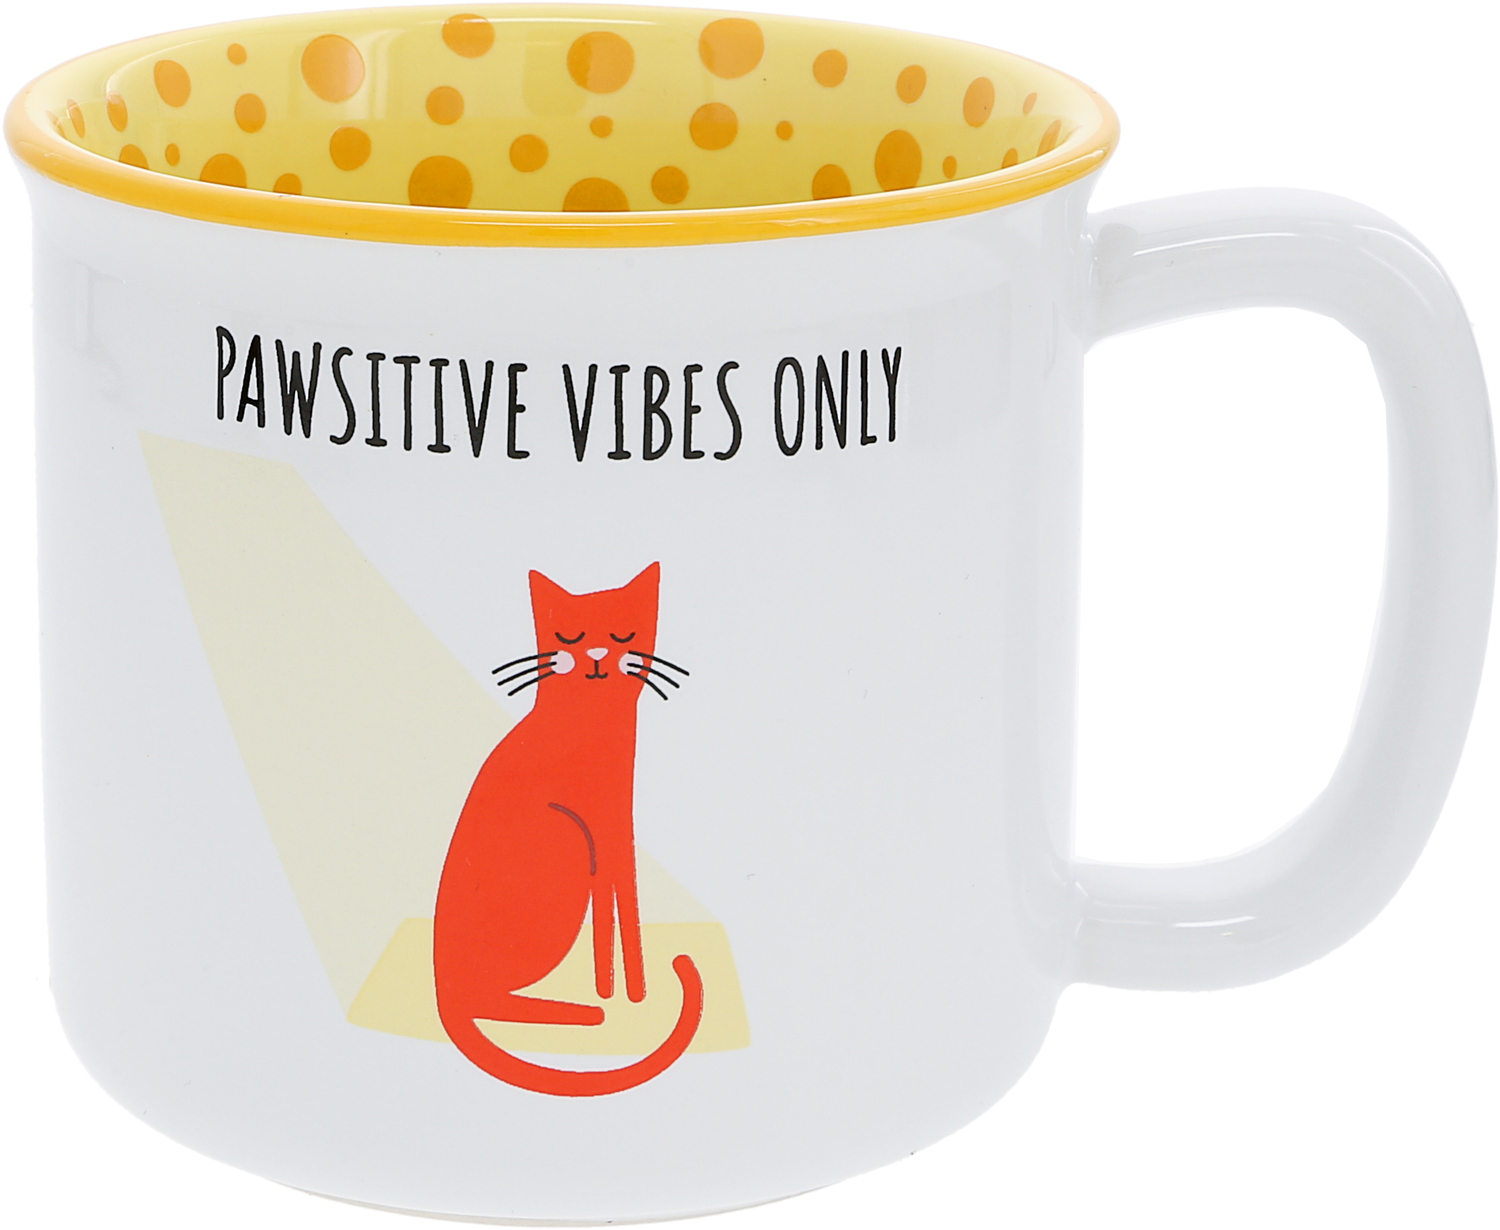 Pawsitive Vibes by Pawsome Pals - Pawsitive Vibes - 18 oz Mug